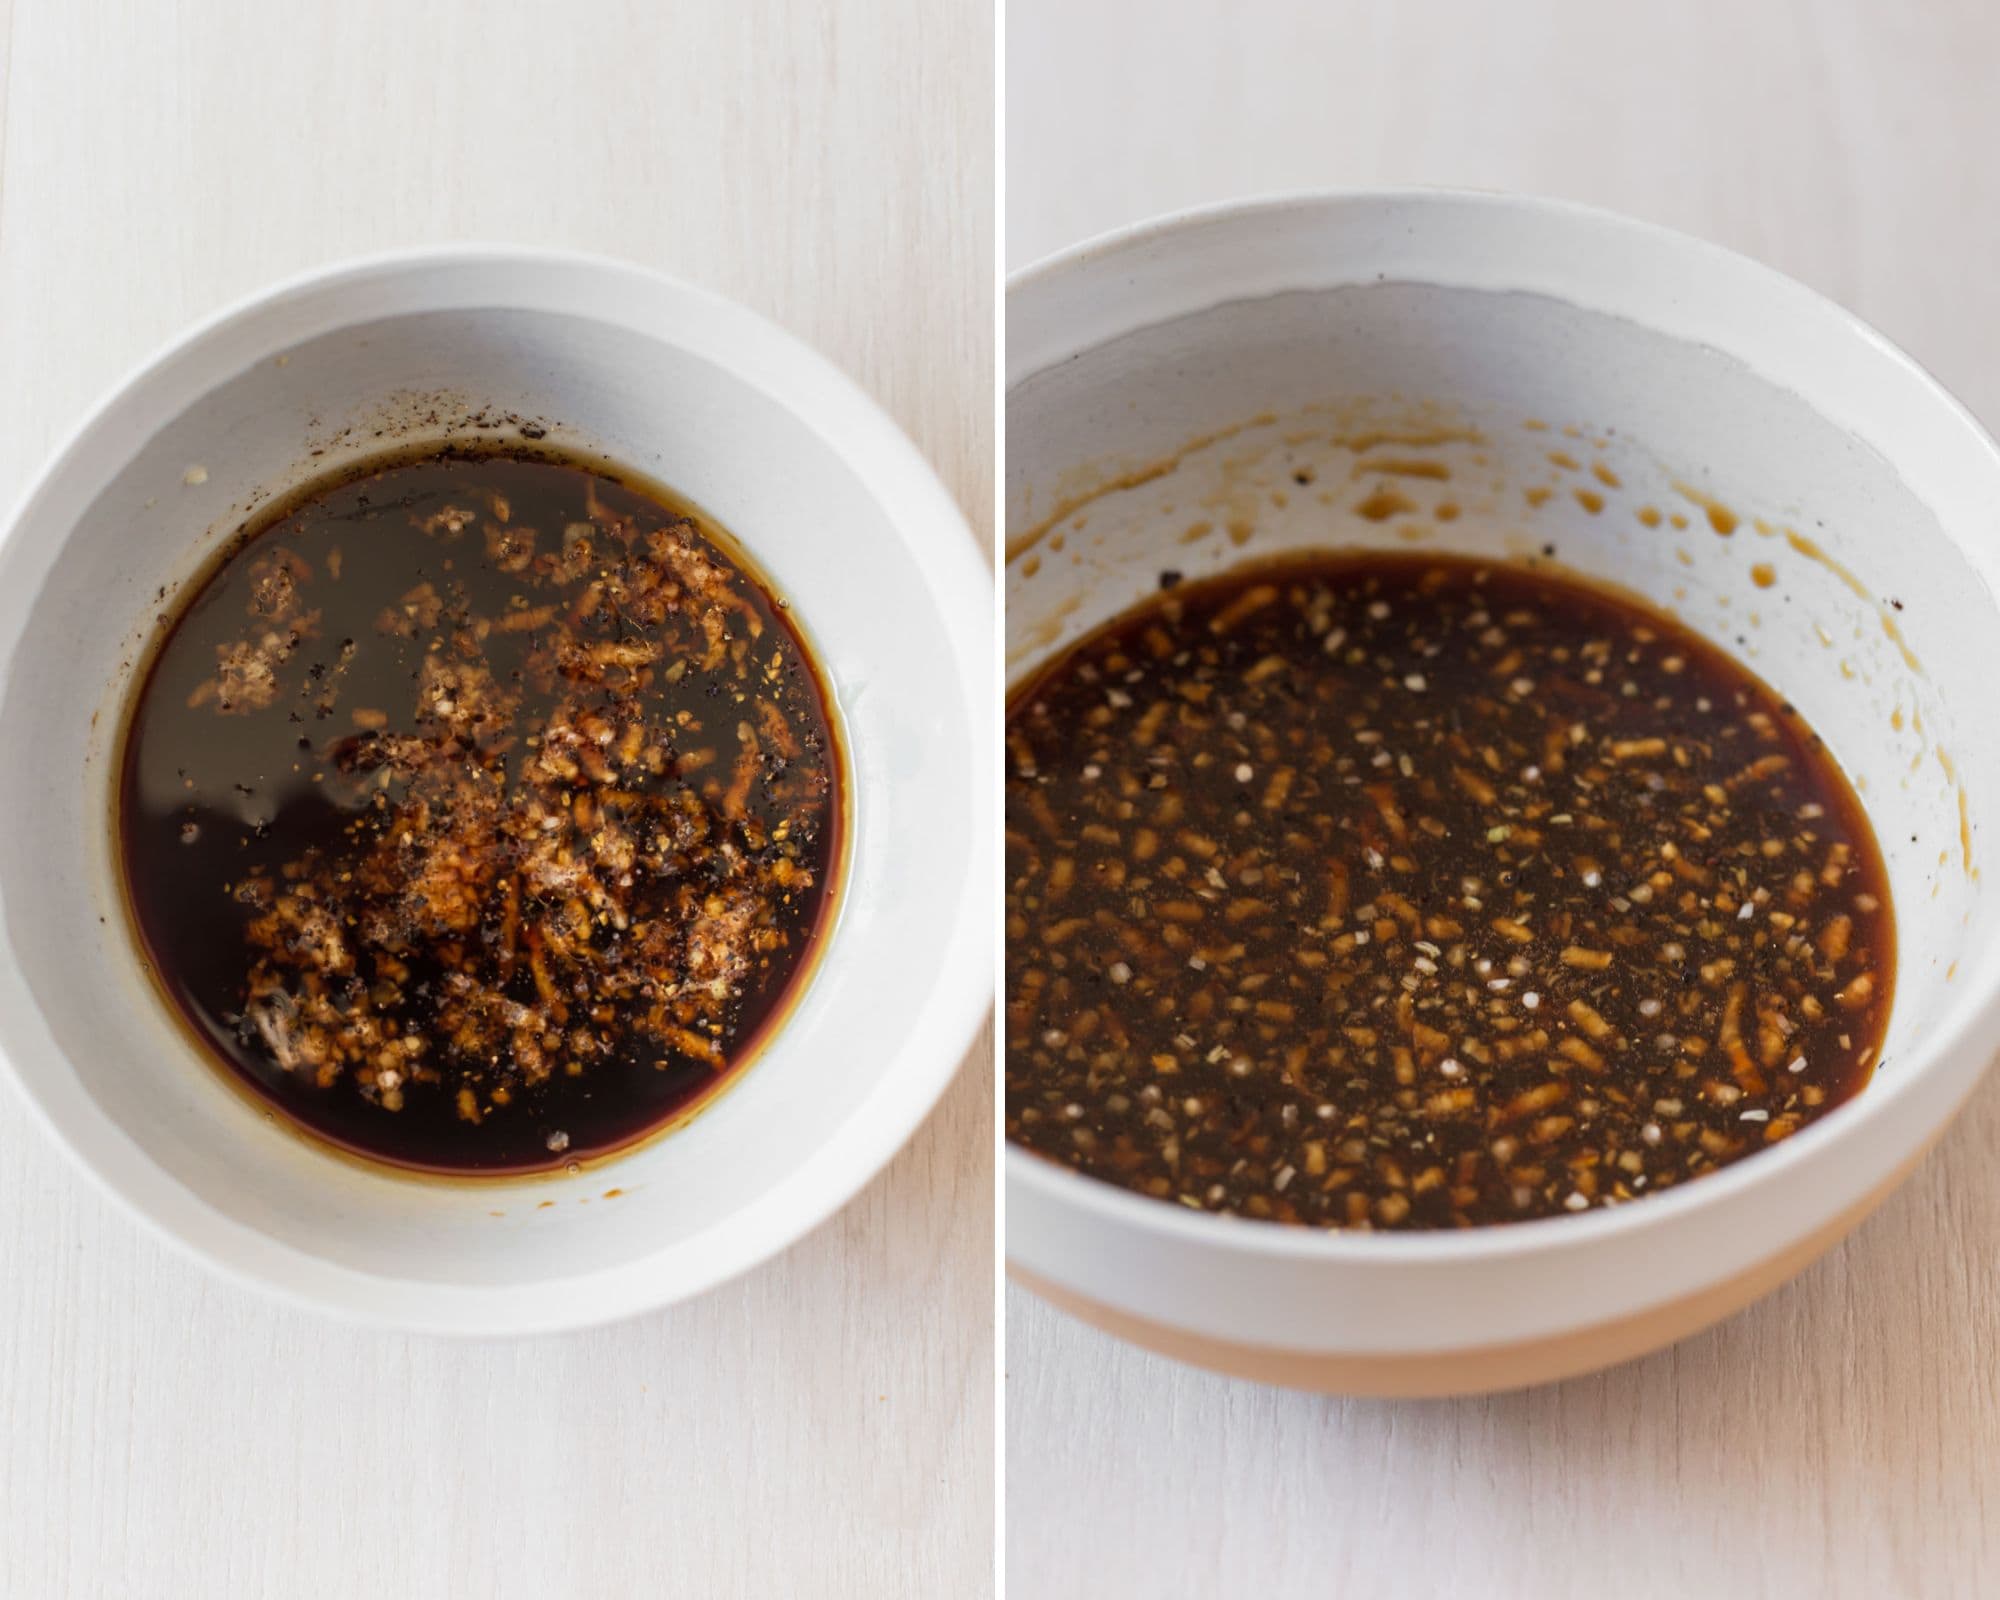 Making honey soy marinade in mixing bowl.